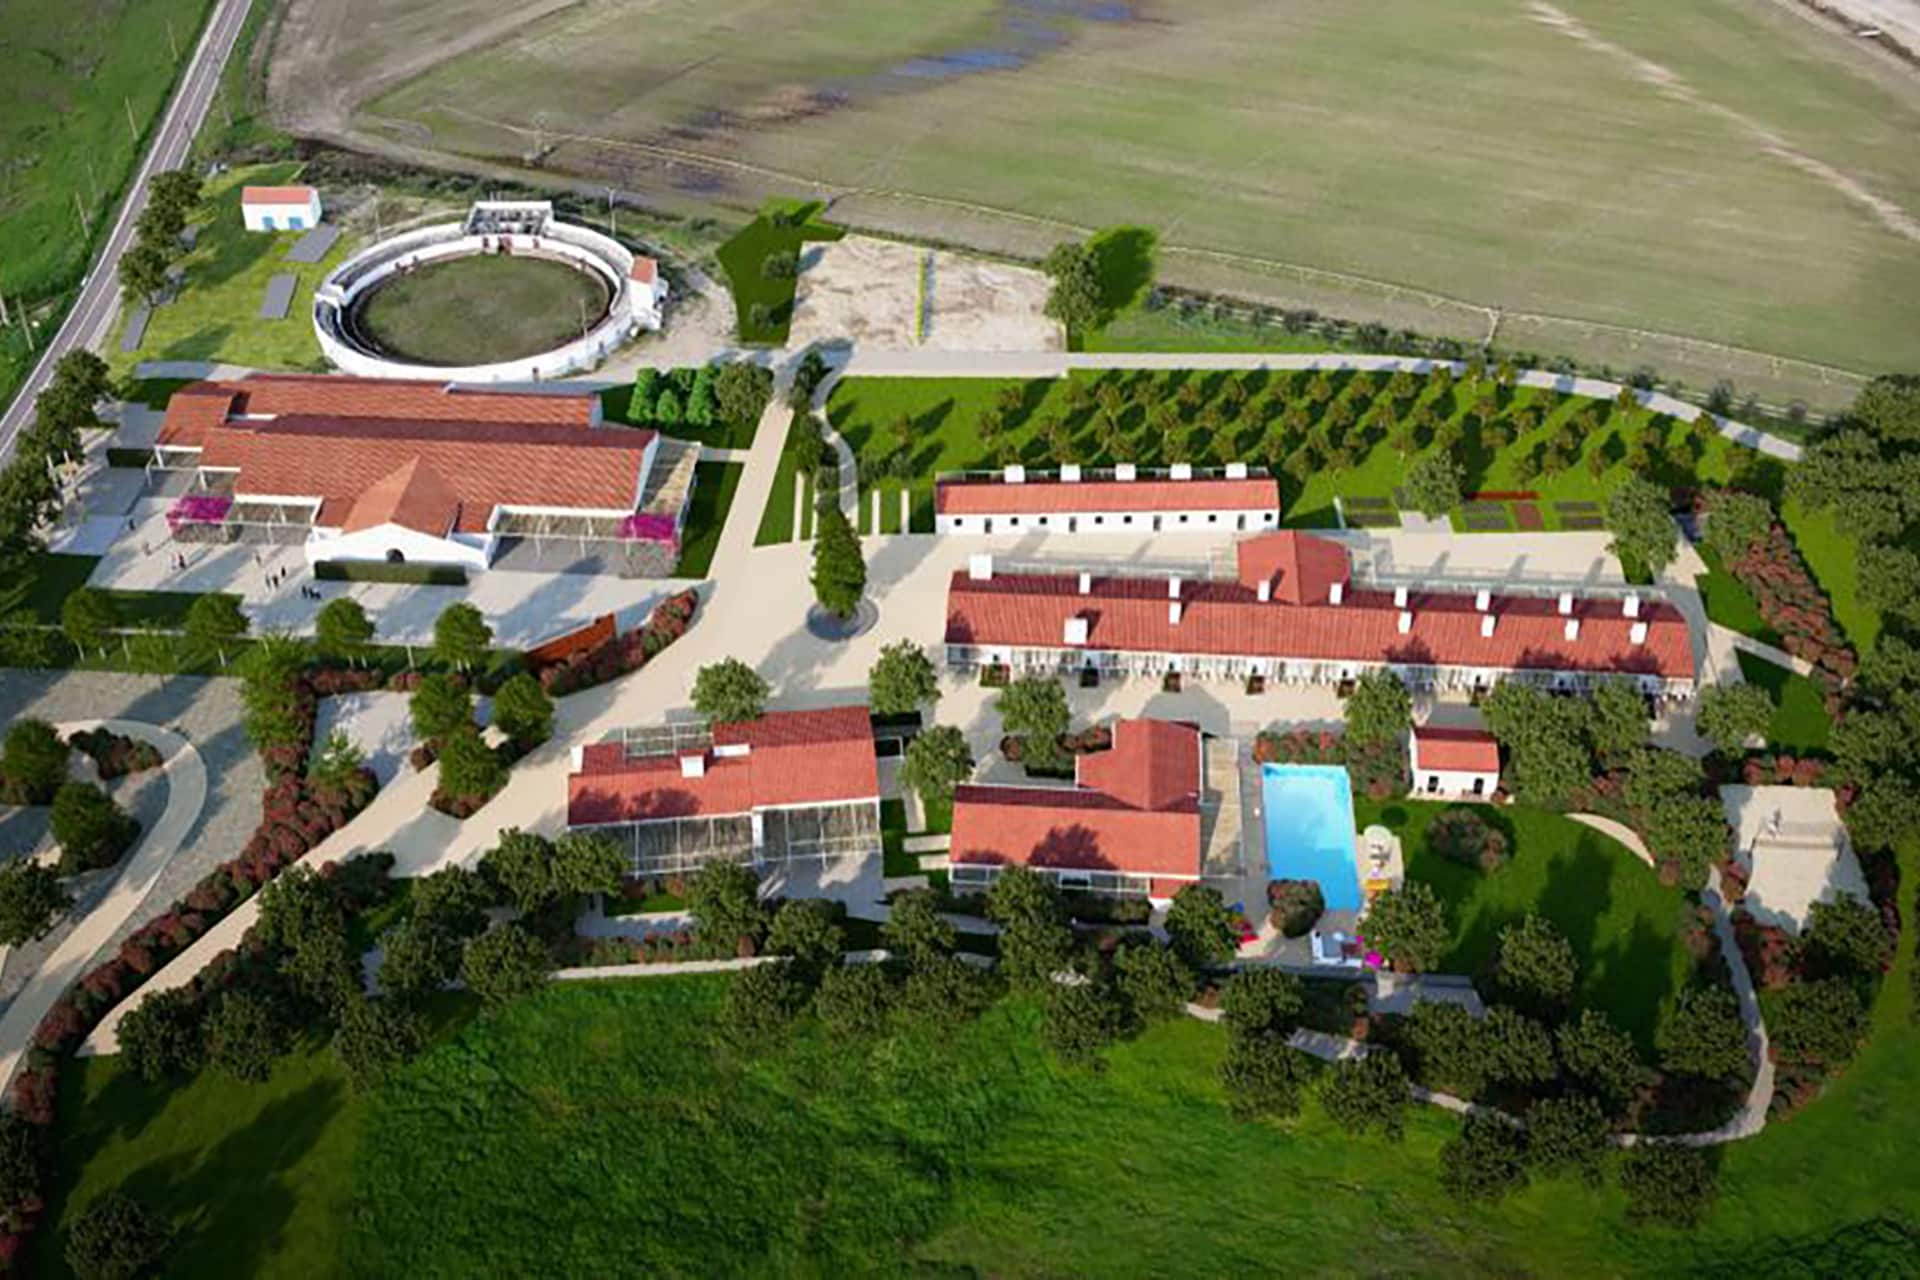 Santa Justa Hotel Rural abre em 2021 em Coruche Topo - NML Turismo - Consultoria e Marketing para o Turismo